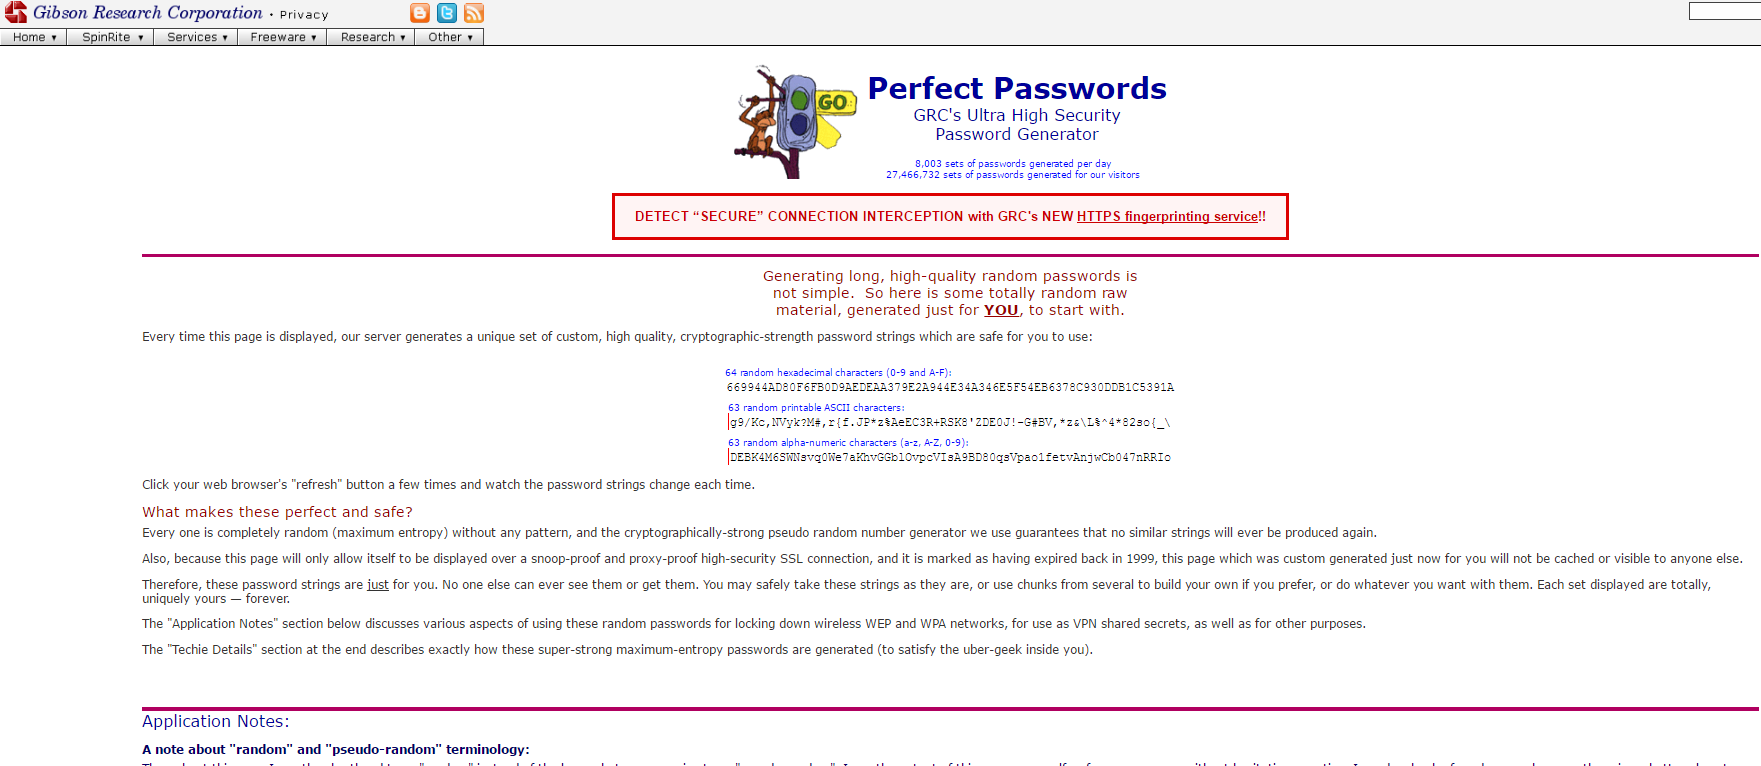 random password generator pronounceable